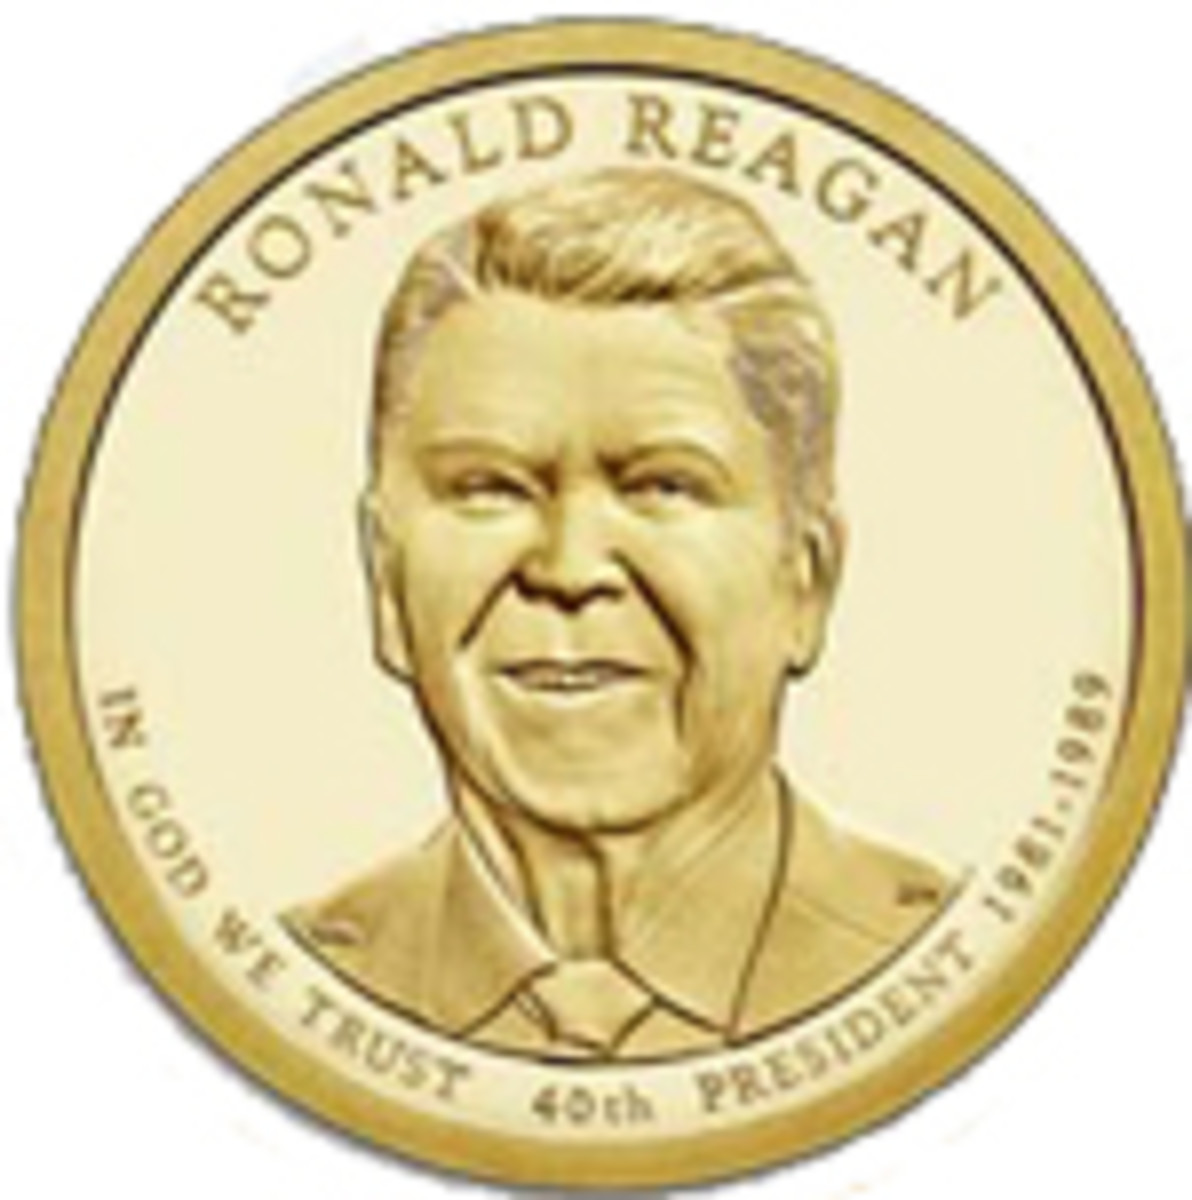 The Reagan Presidential dollar design.